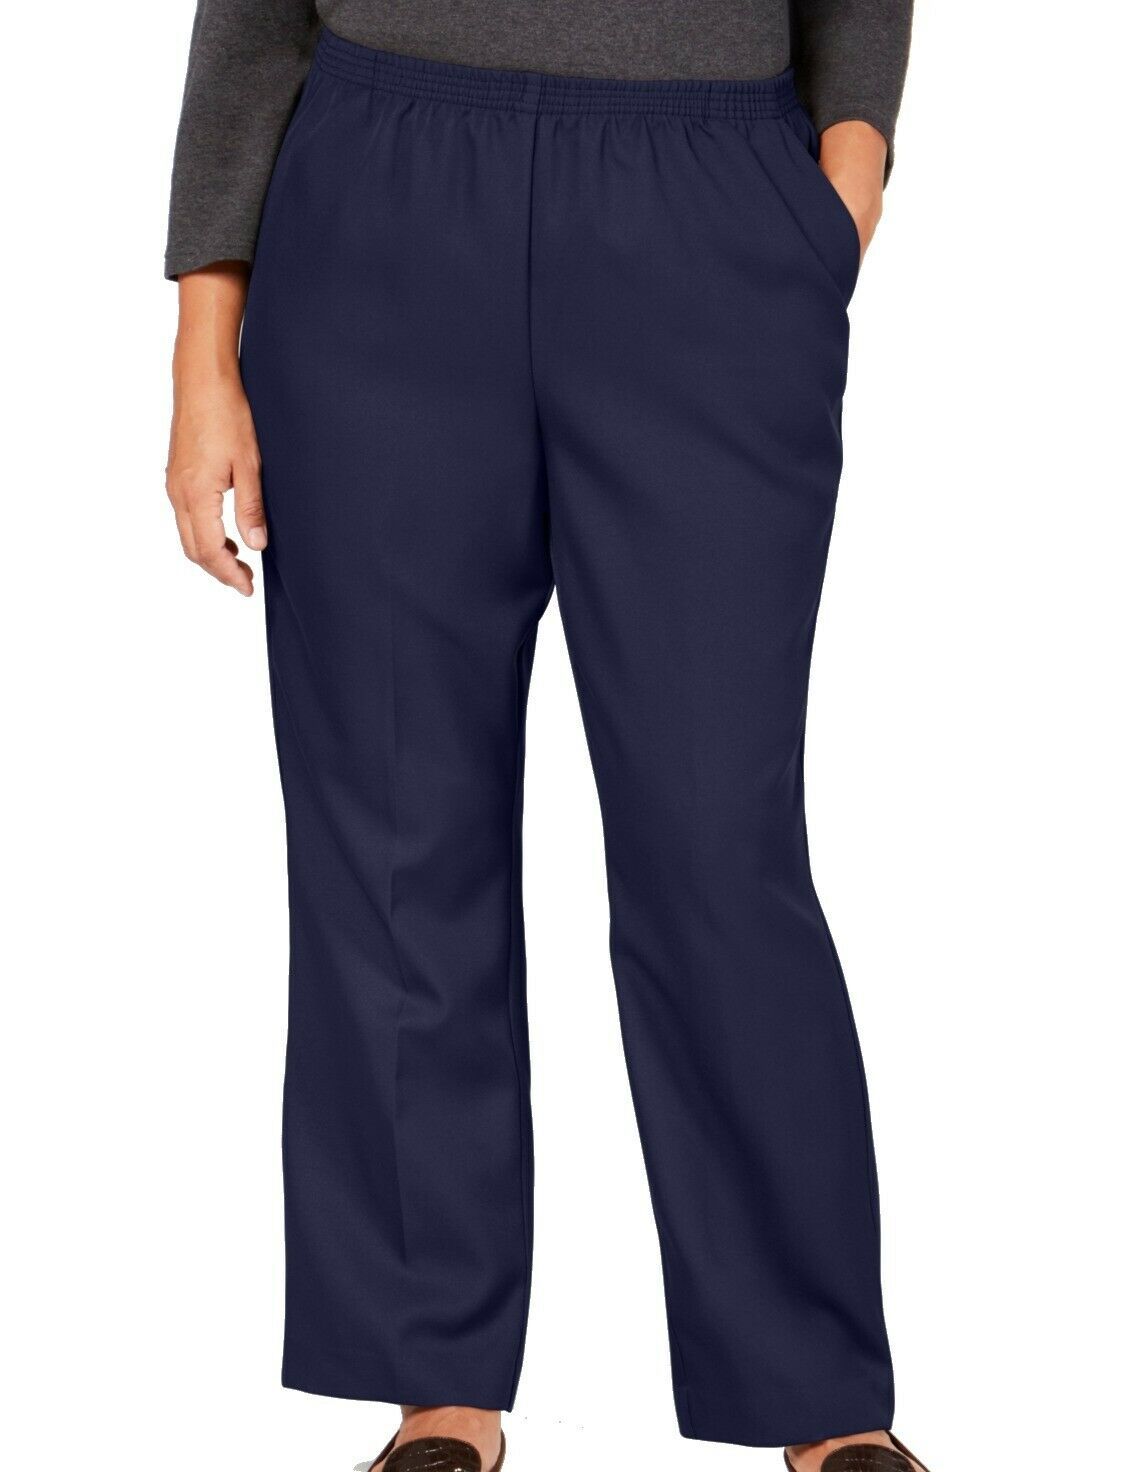 Karen Scott Women's Pants Plus Pull On Comfy Stretch Intrepid Blue 1X NWT